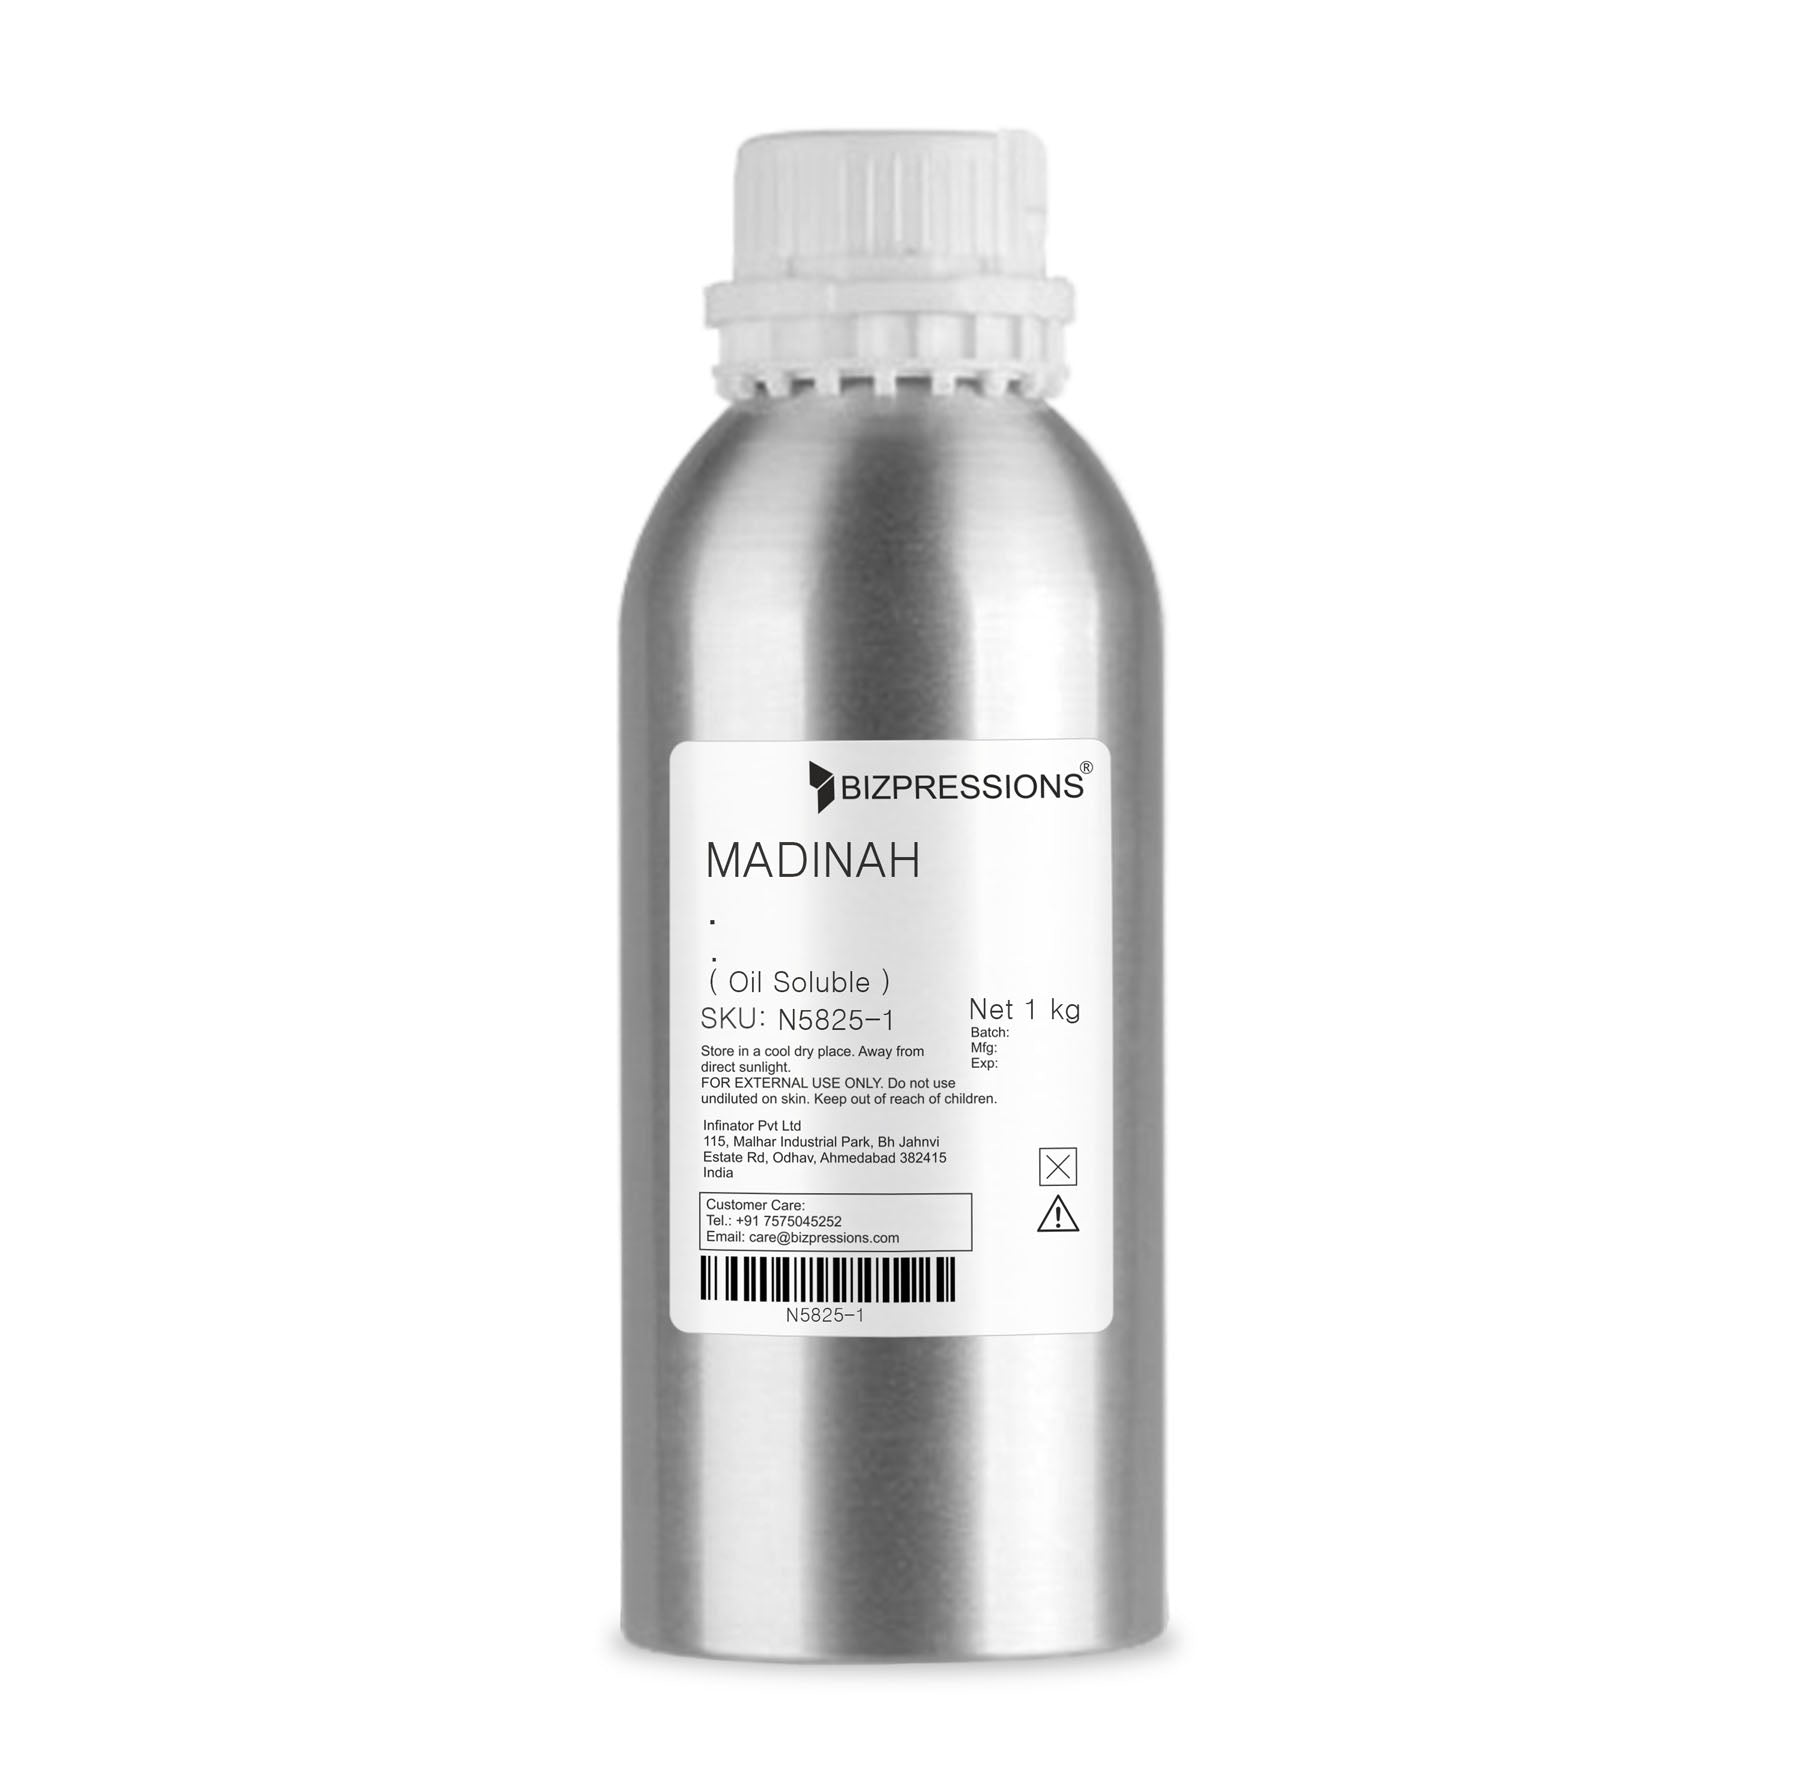 MADINAH - Fragrance ( Oil Soluble ) - 1 kg